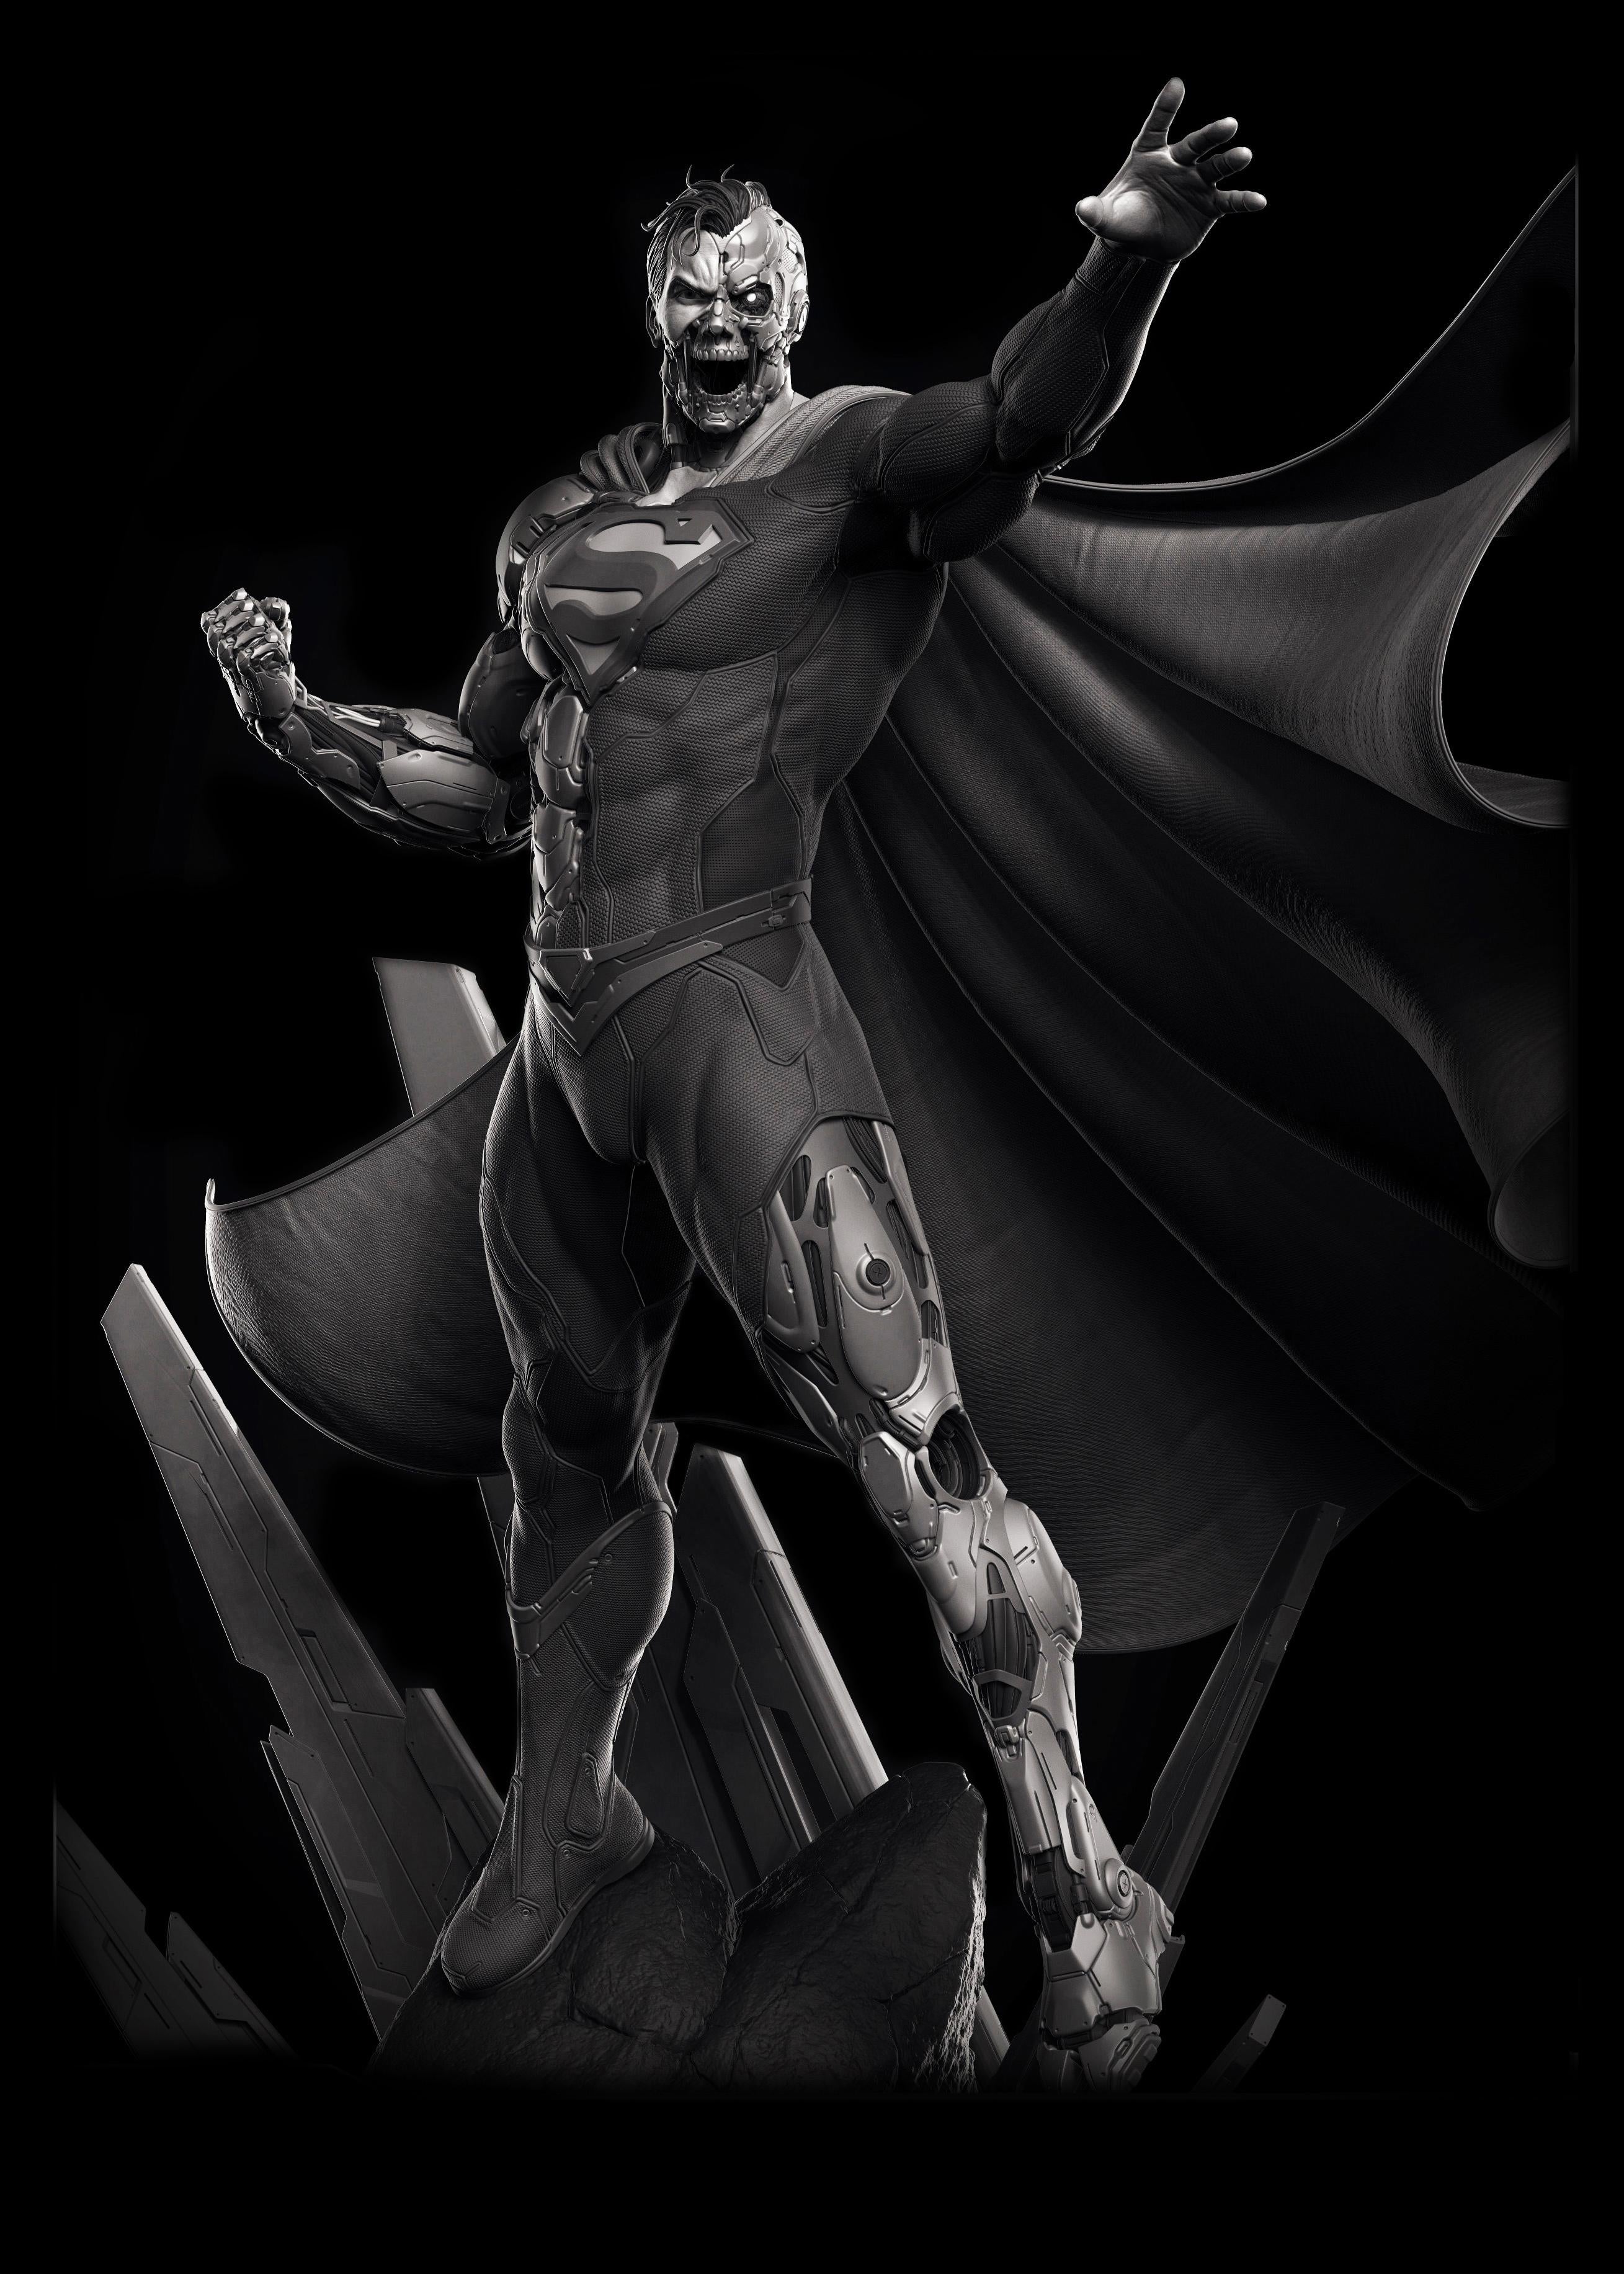 Superman X Cyborg Superman Cool Art Wallpapers